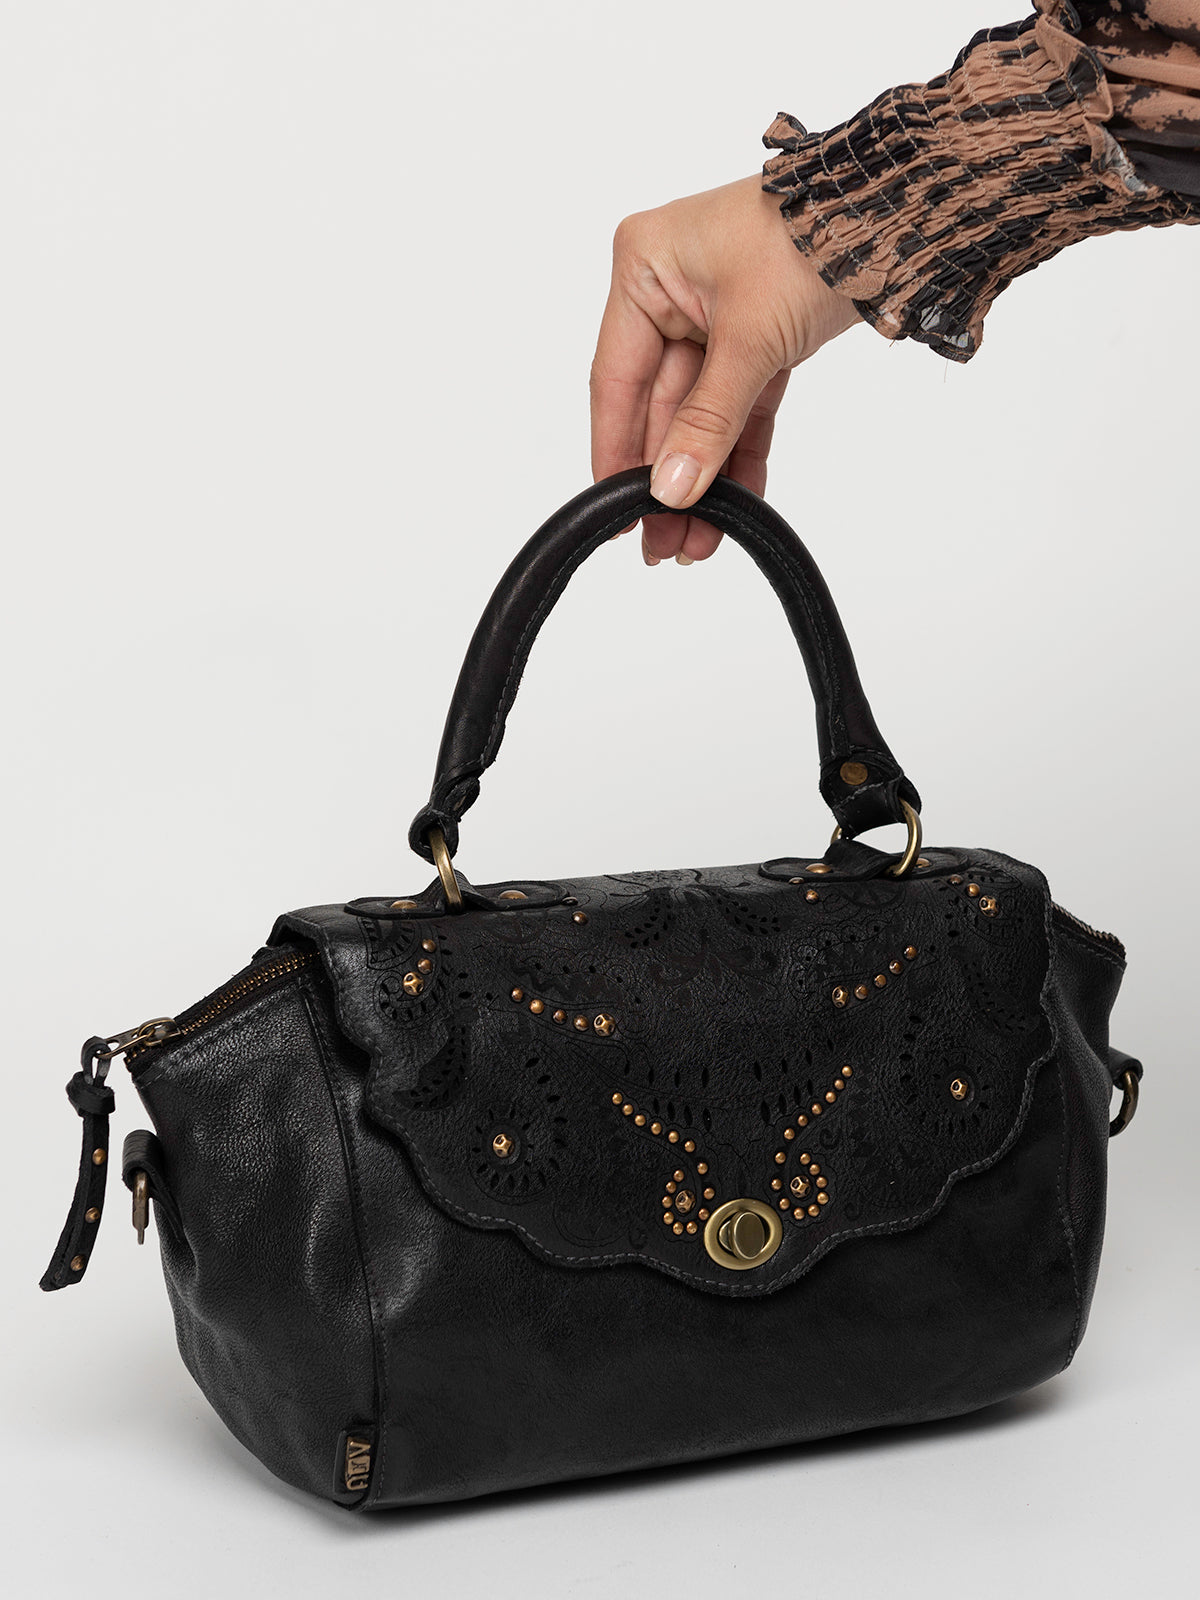 CAROB: Black leather laser cut work handbag by Art N Vintage